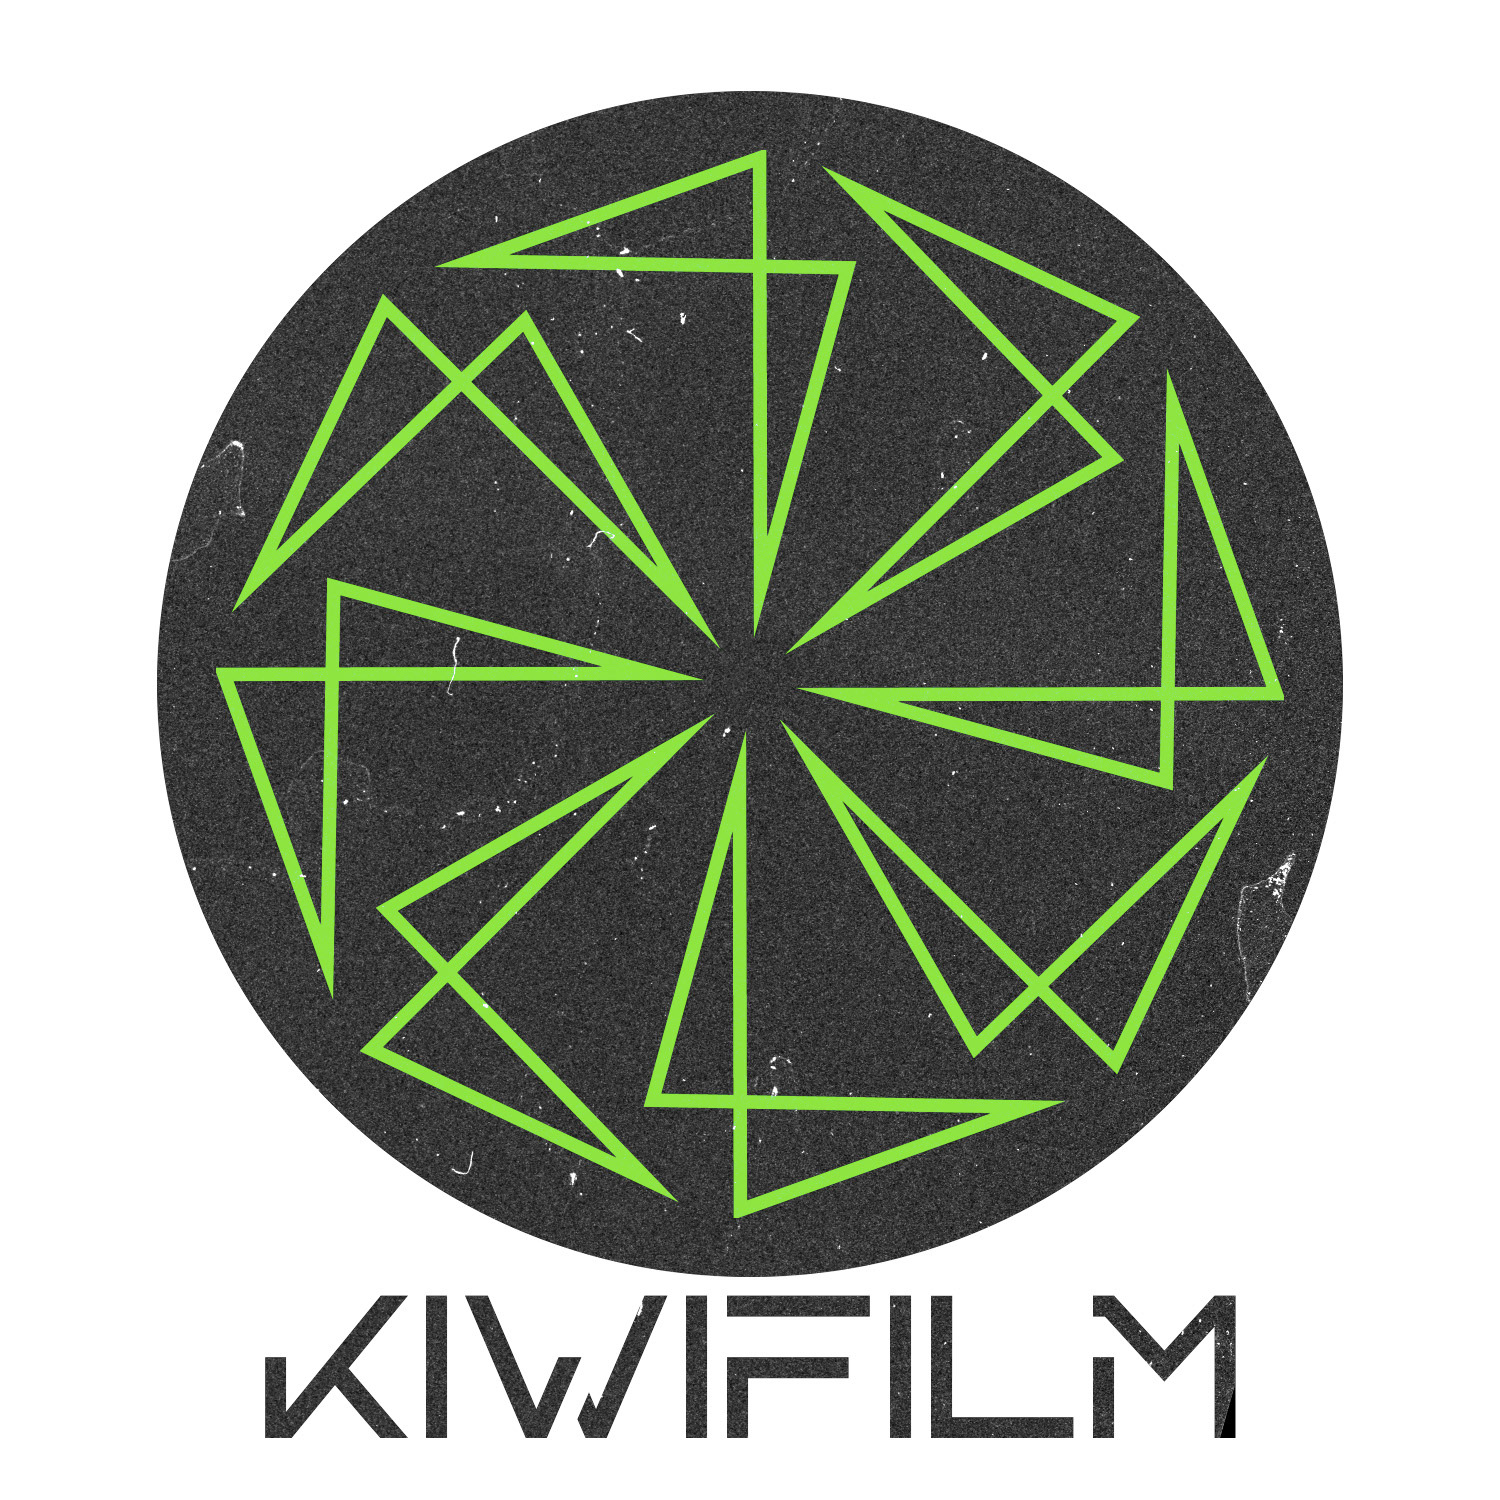 Kiwifilm Photography - Kiwi Barranco